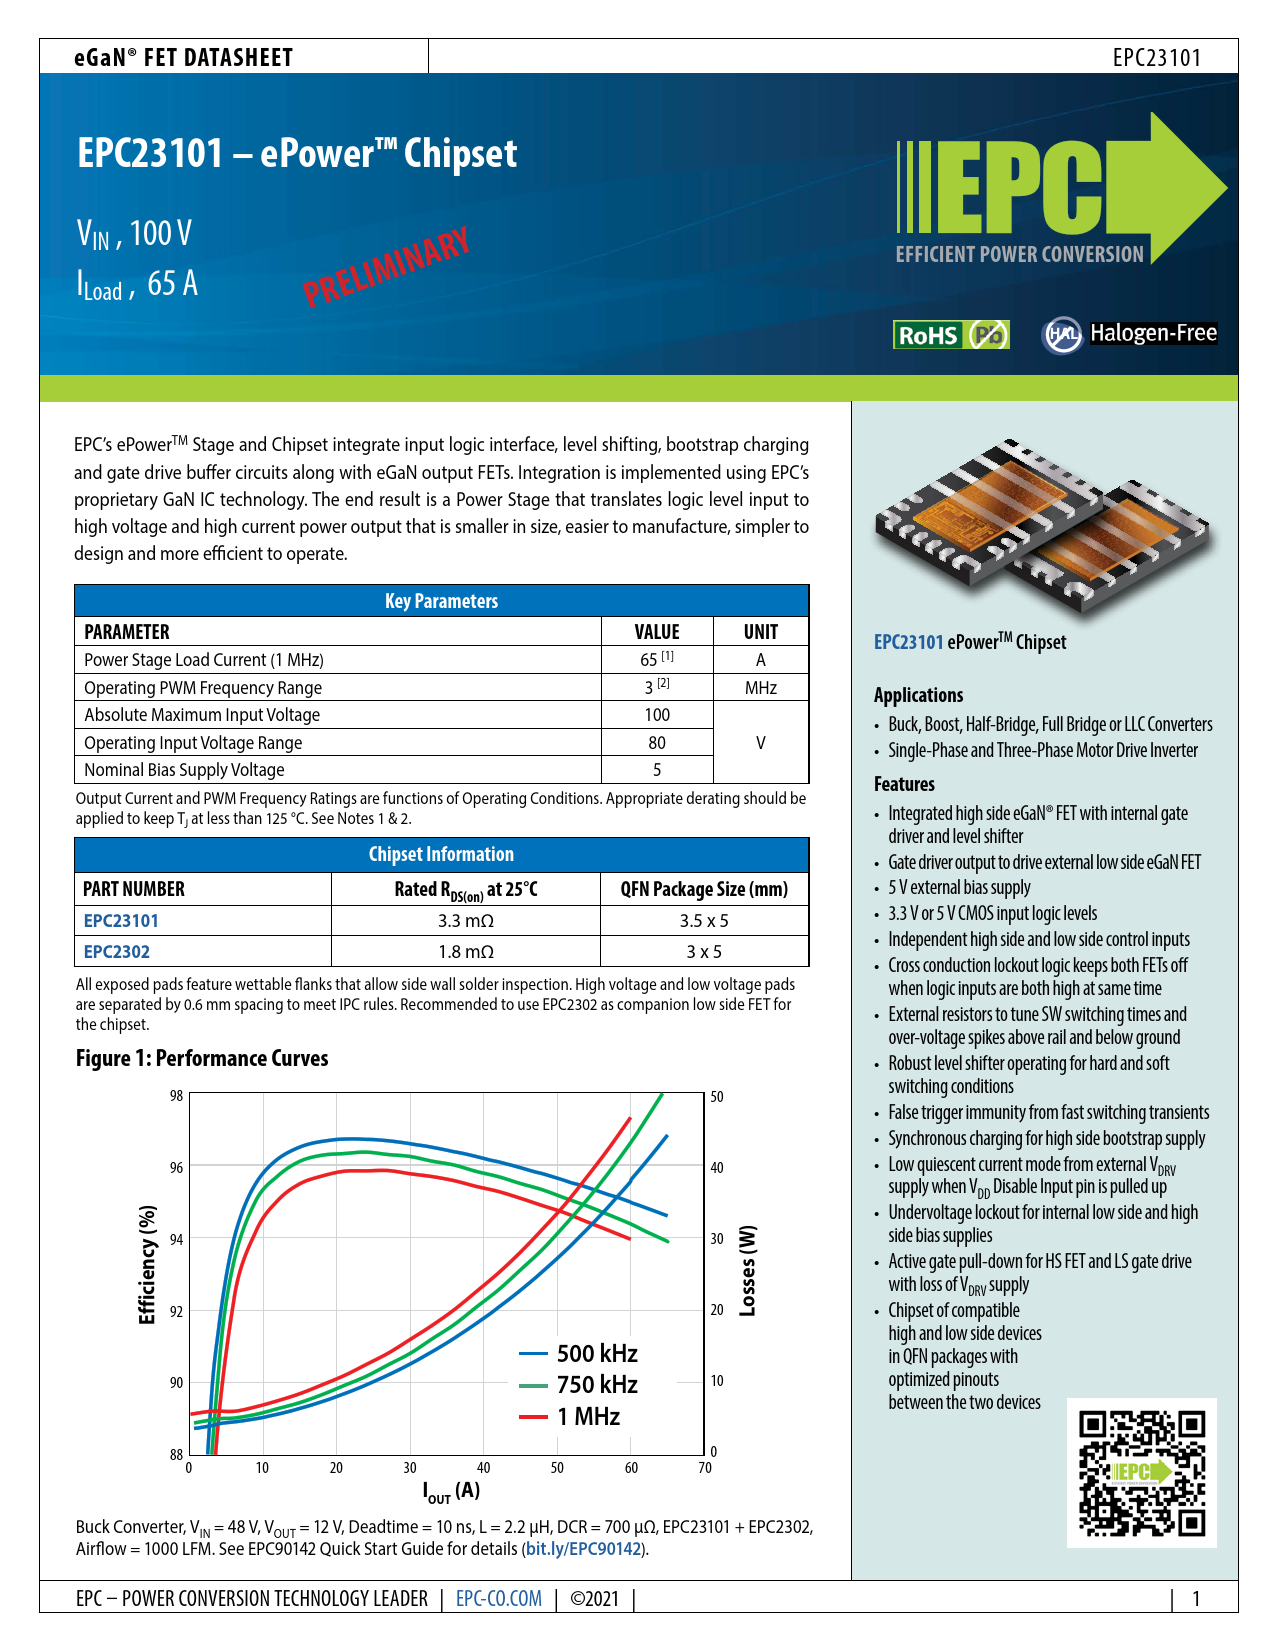 Preliminary Datasheet EPC23101 Efficient Power Conversion